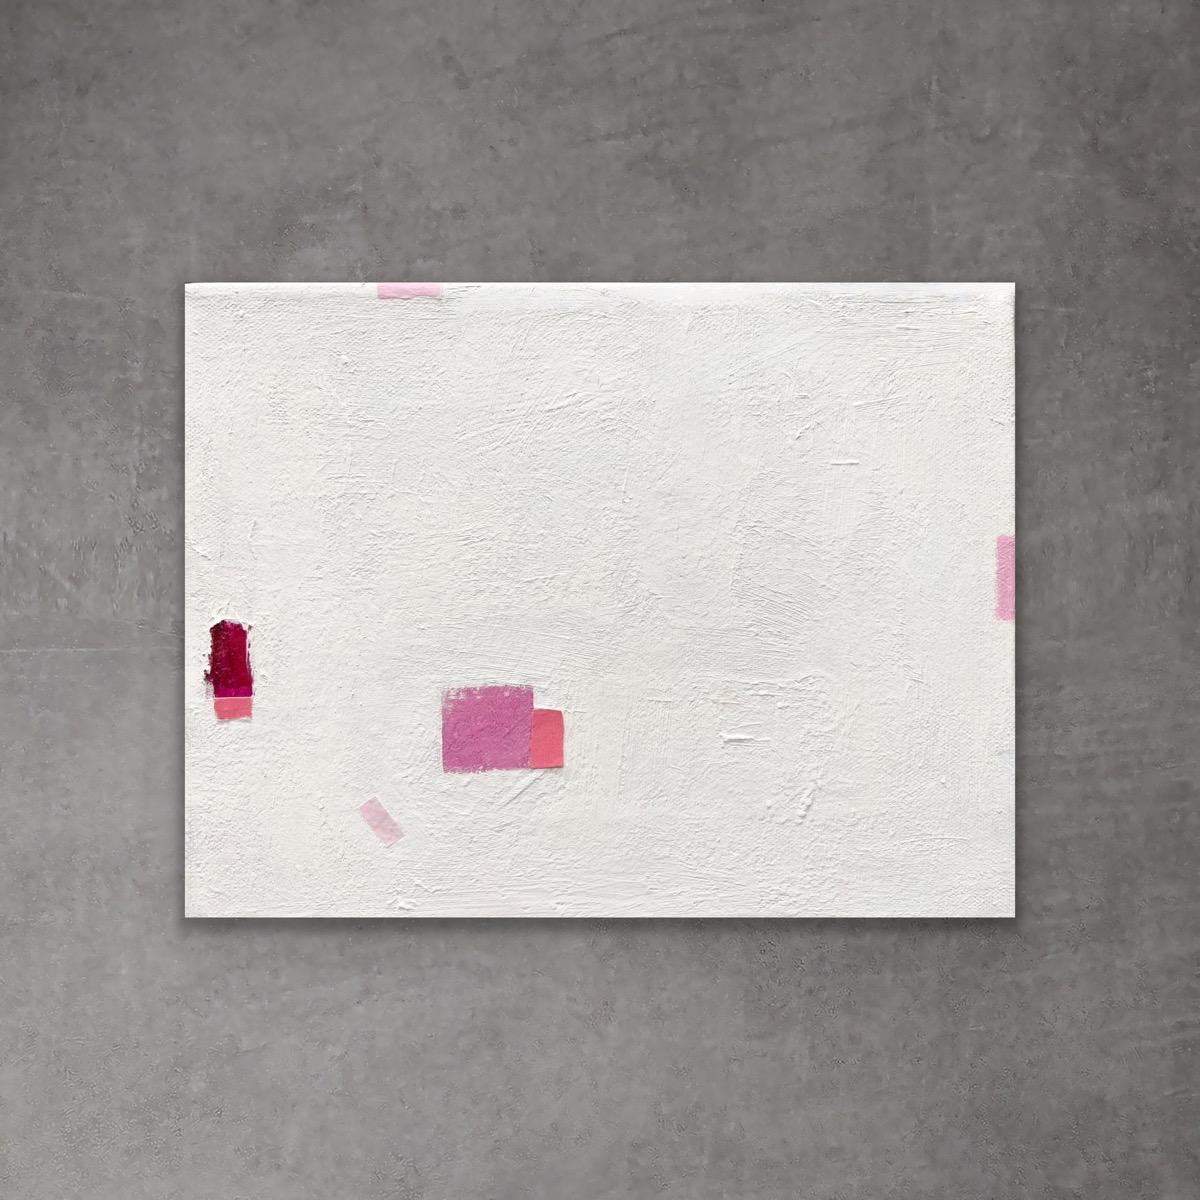 Andrea Stajan-Ferkul Abstract Painting – Rosa Dinge - 8"x10", Rosa und Weiß, minimalistisches abstraktes Gemälde